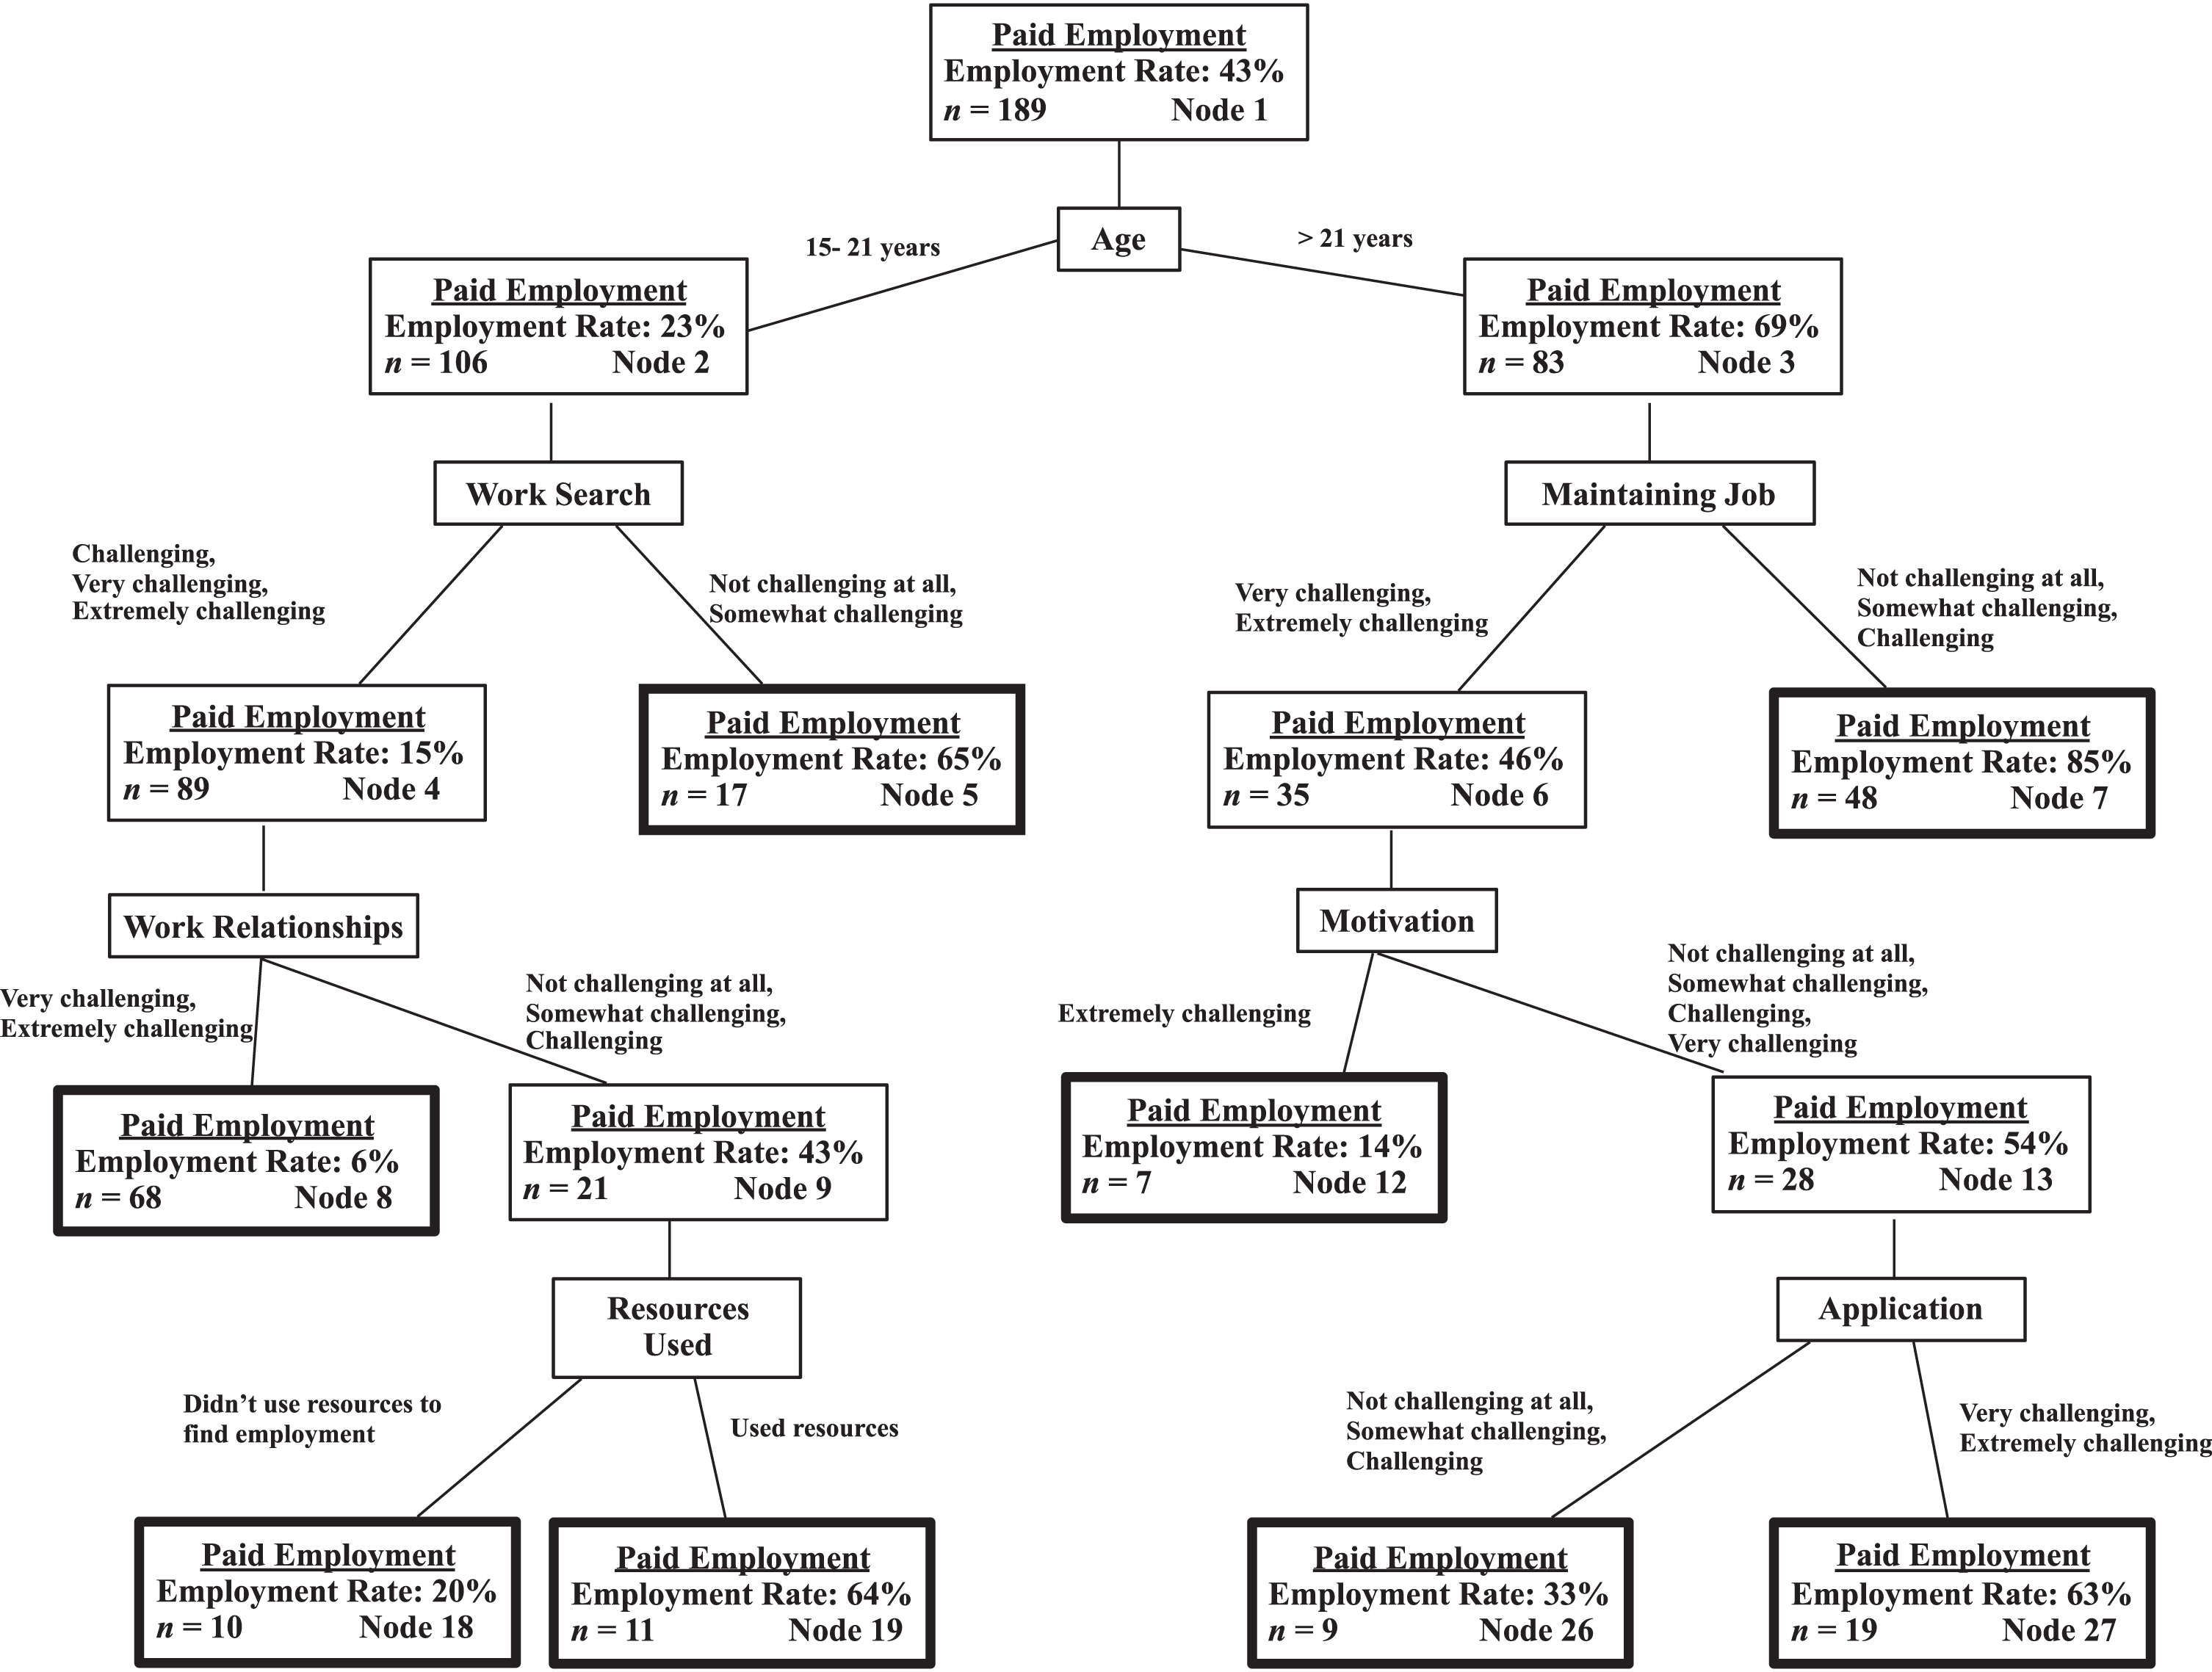 Classification decision tree.